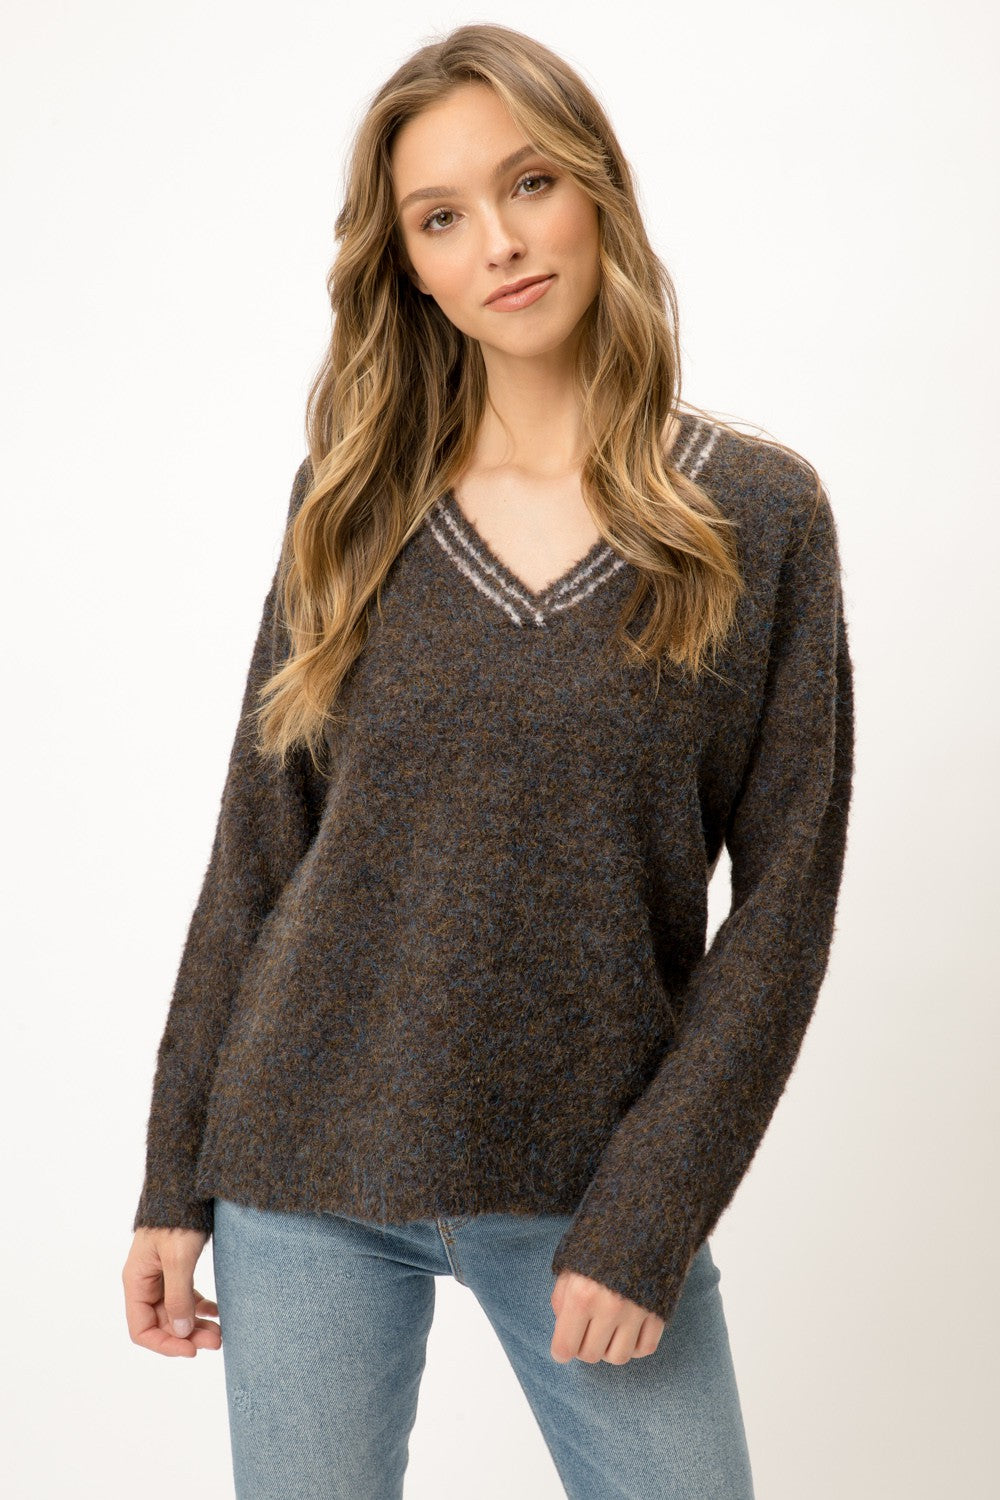 Adeline Yarn V-Neck Sweater- (Choco)